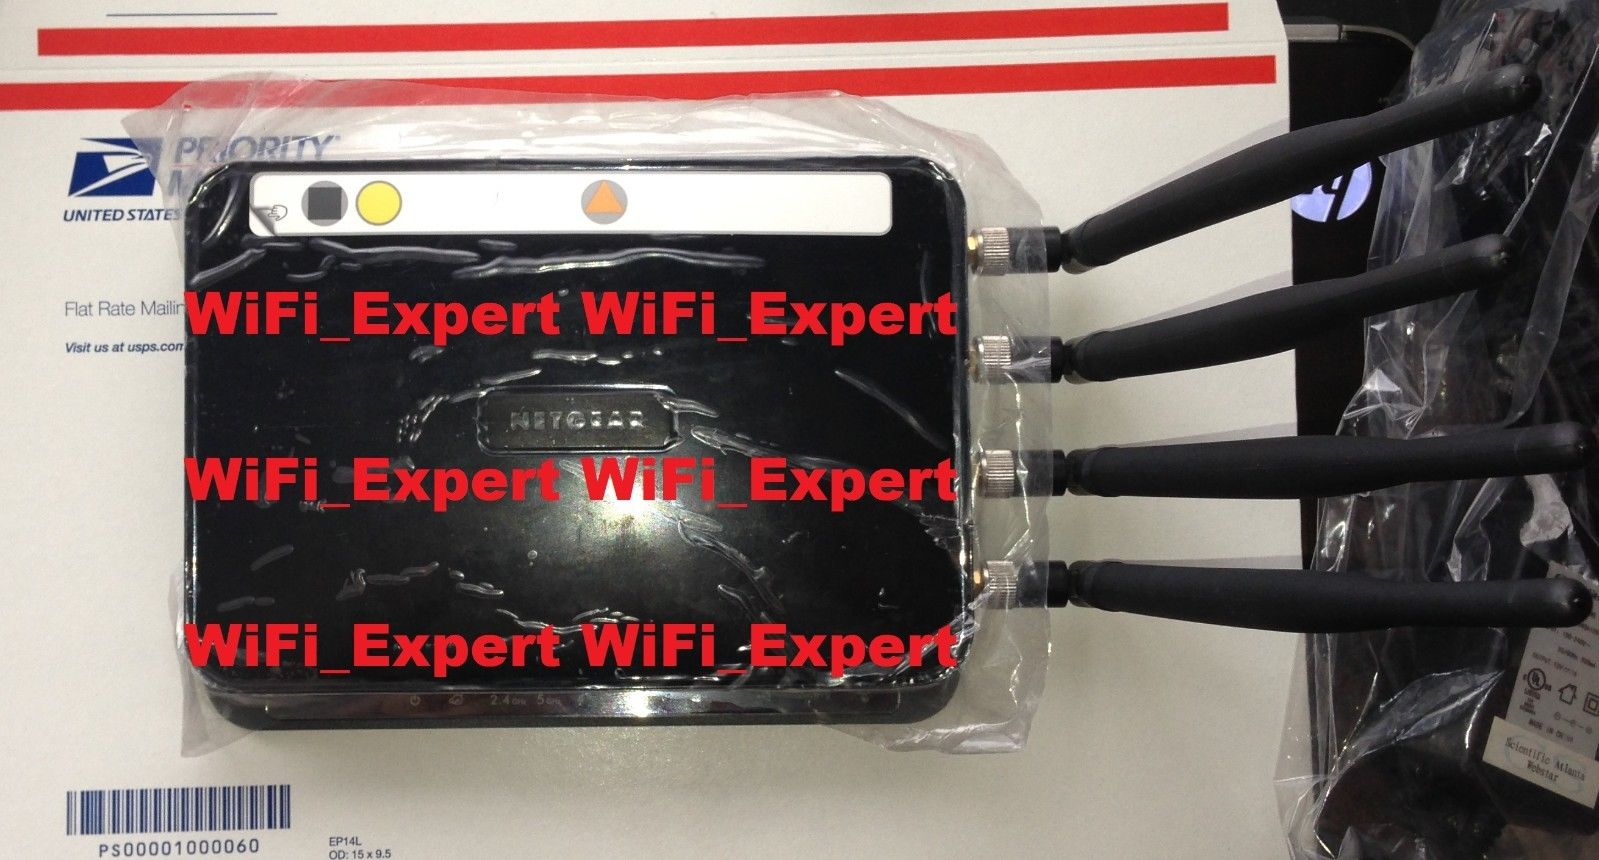 2dBi wireless Antenna booster Mod Kit for Netgear N600 WNDR3400 Dual Gigabit 